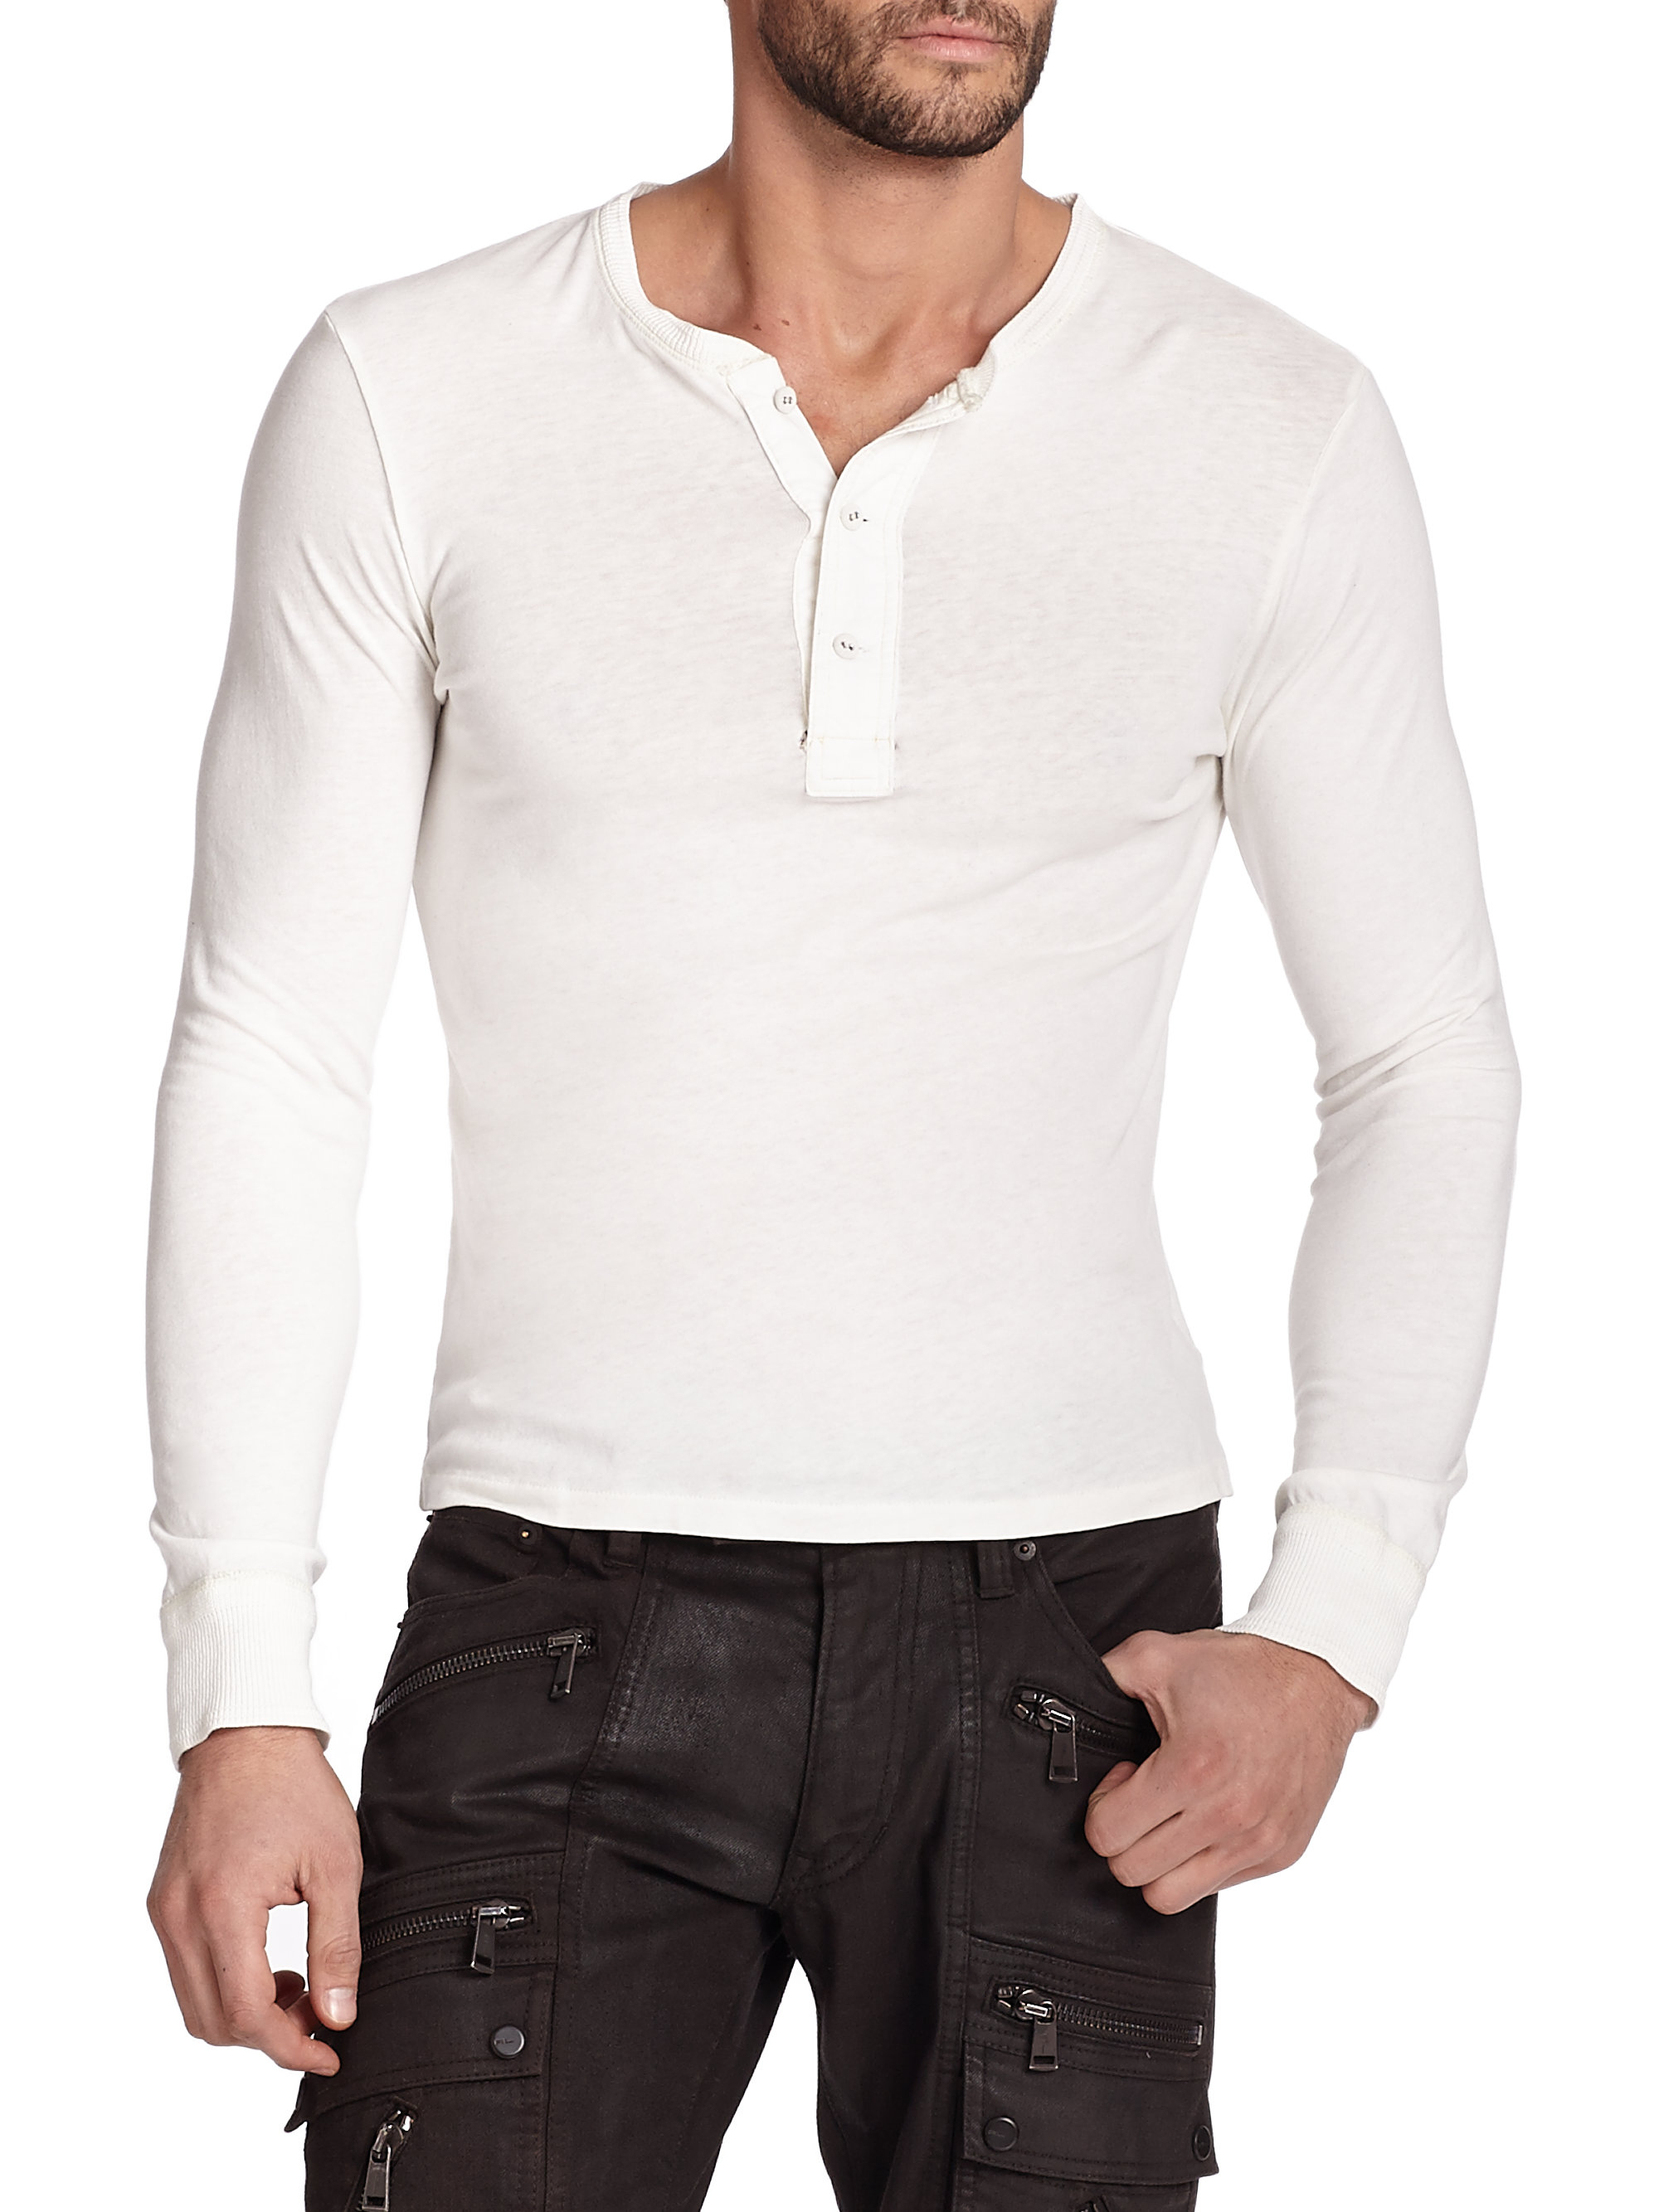 Lyst - Ralph Lauren Black Label Ribbed Cotton Henley in White for Men